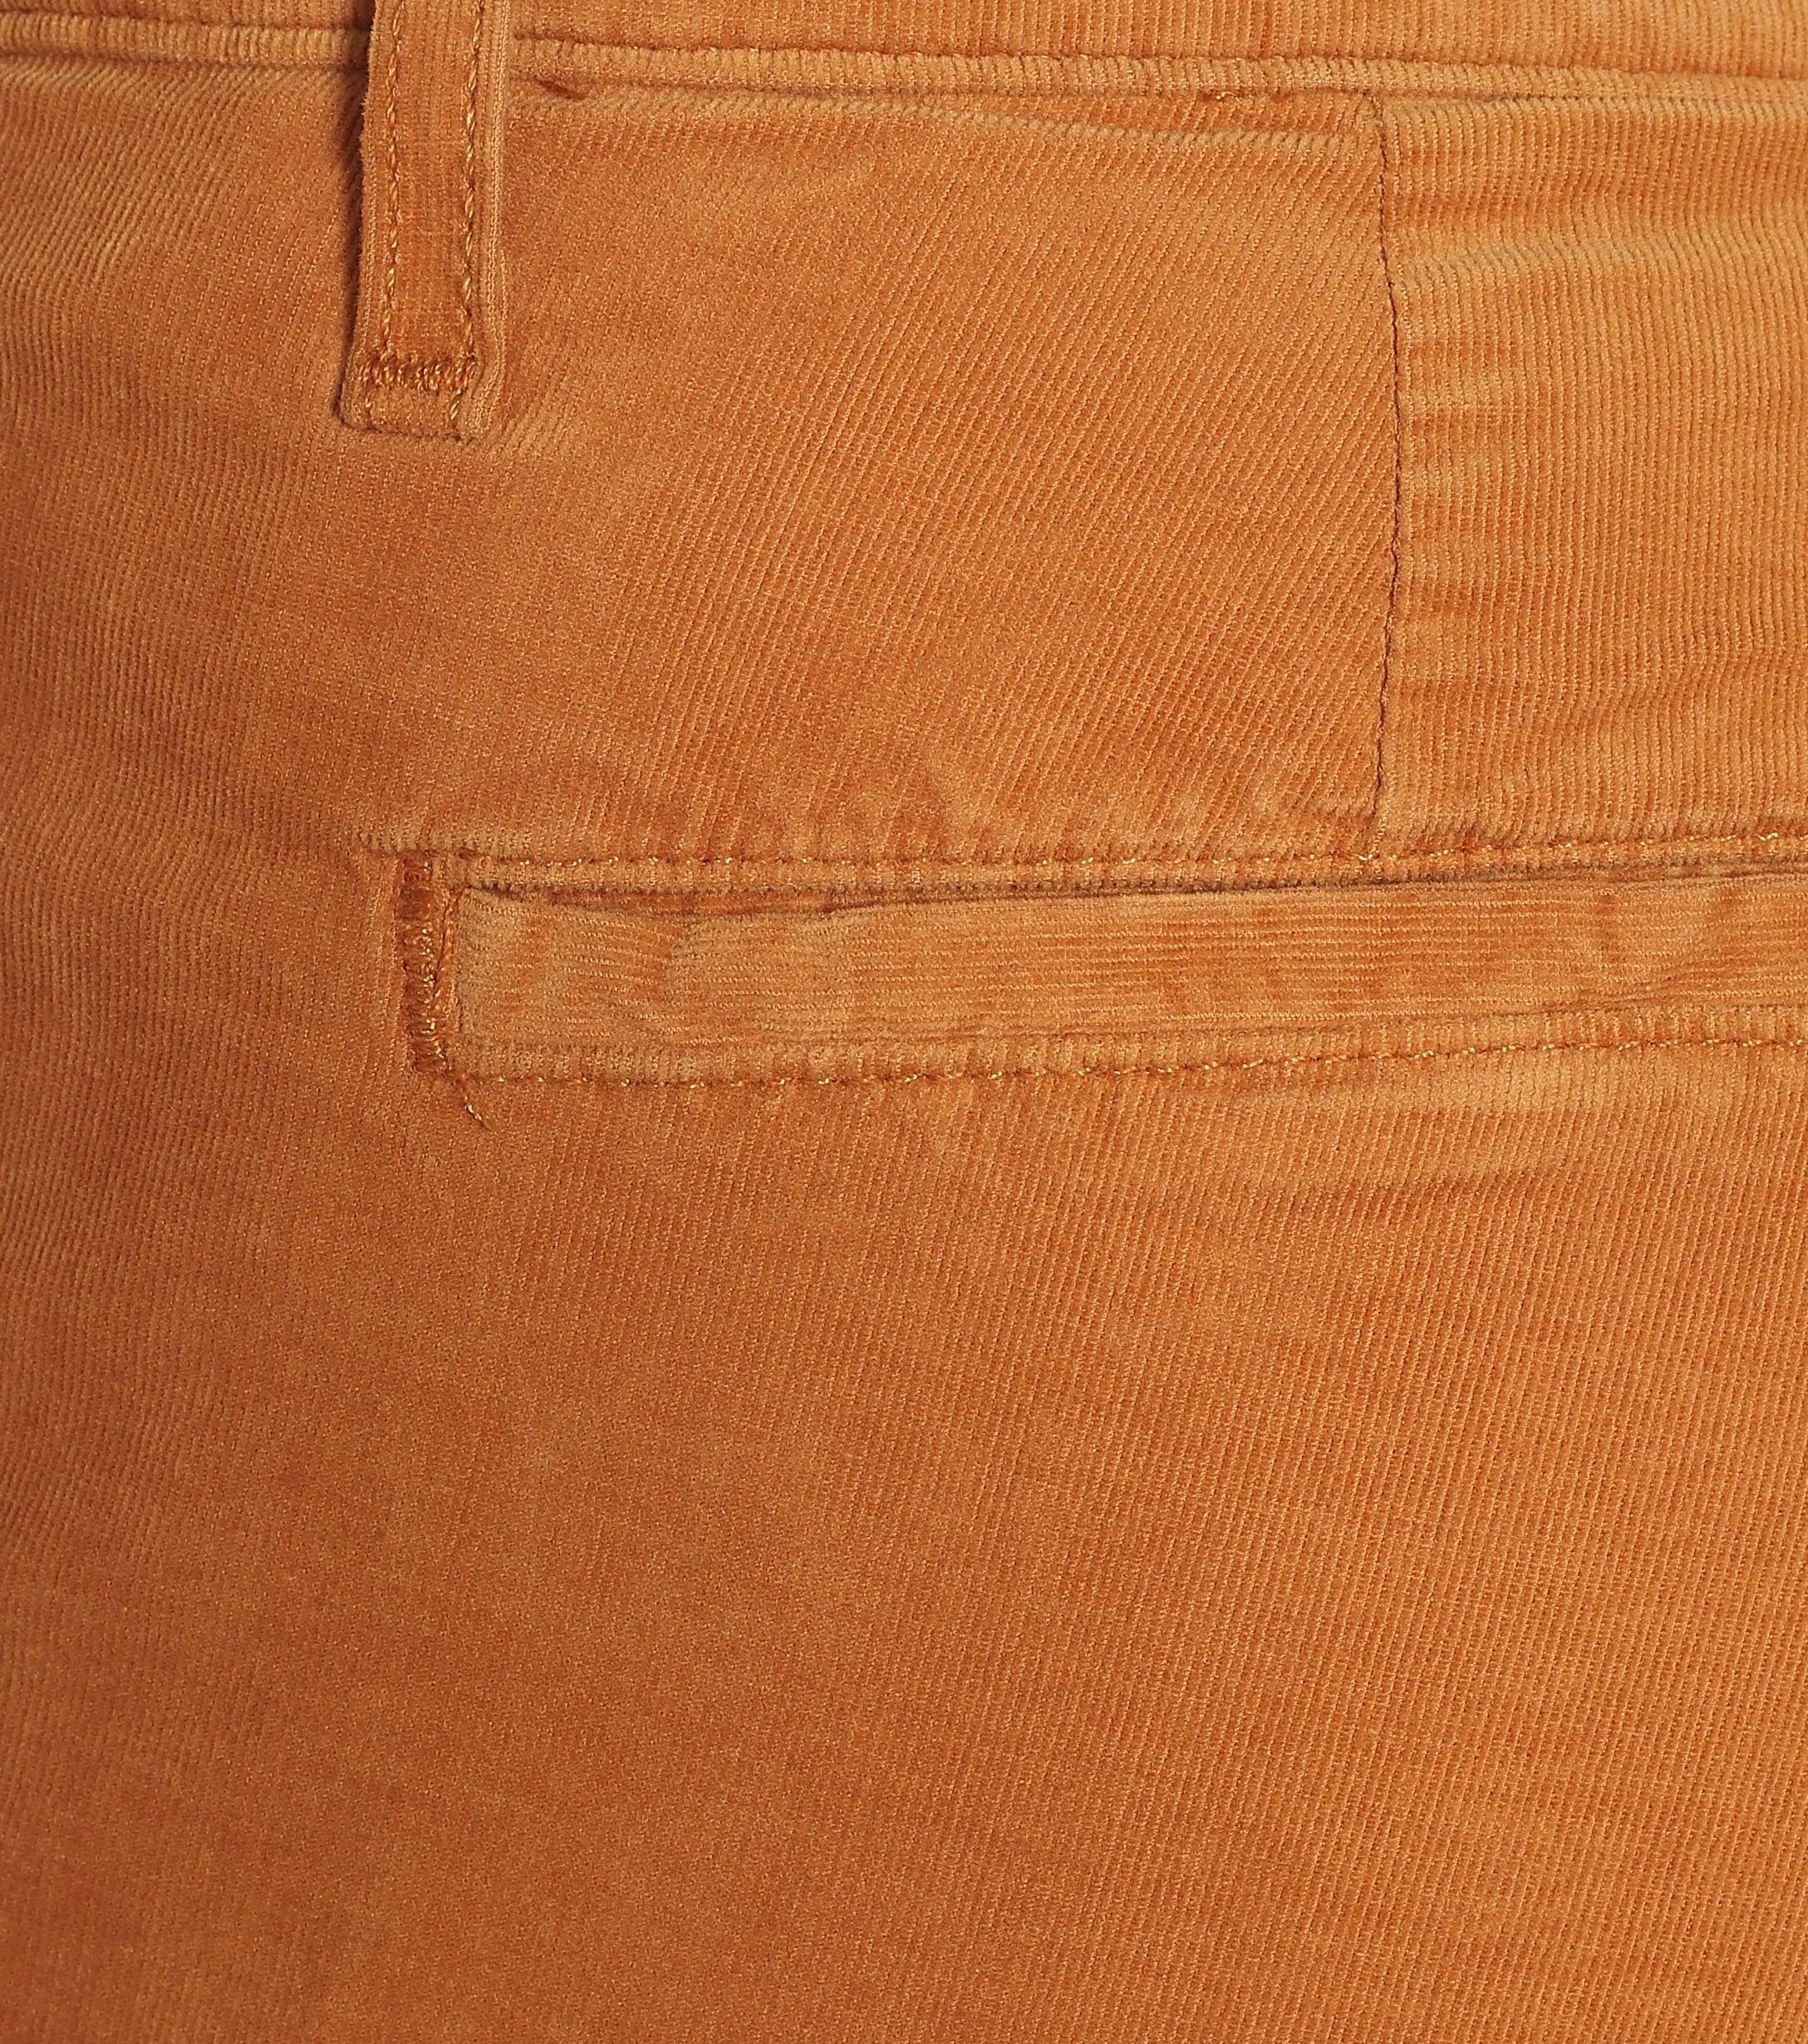 AG Jeans The Caden Corduroy Slim Pants in Gold (Metallic) - Lyst